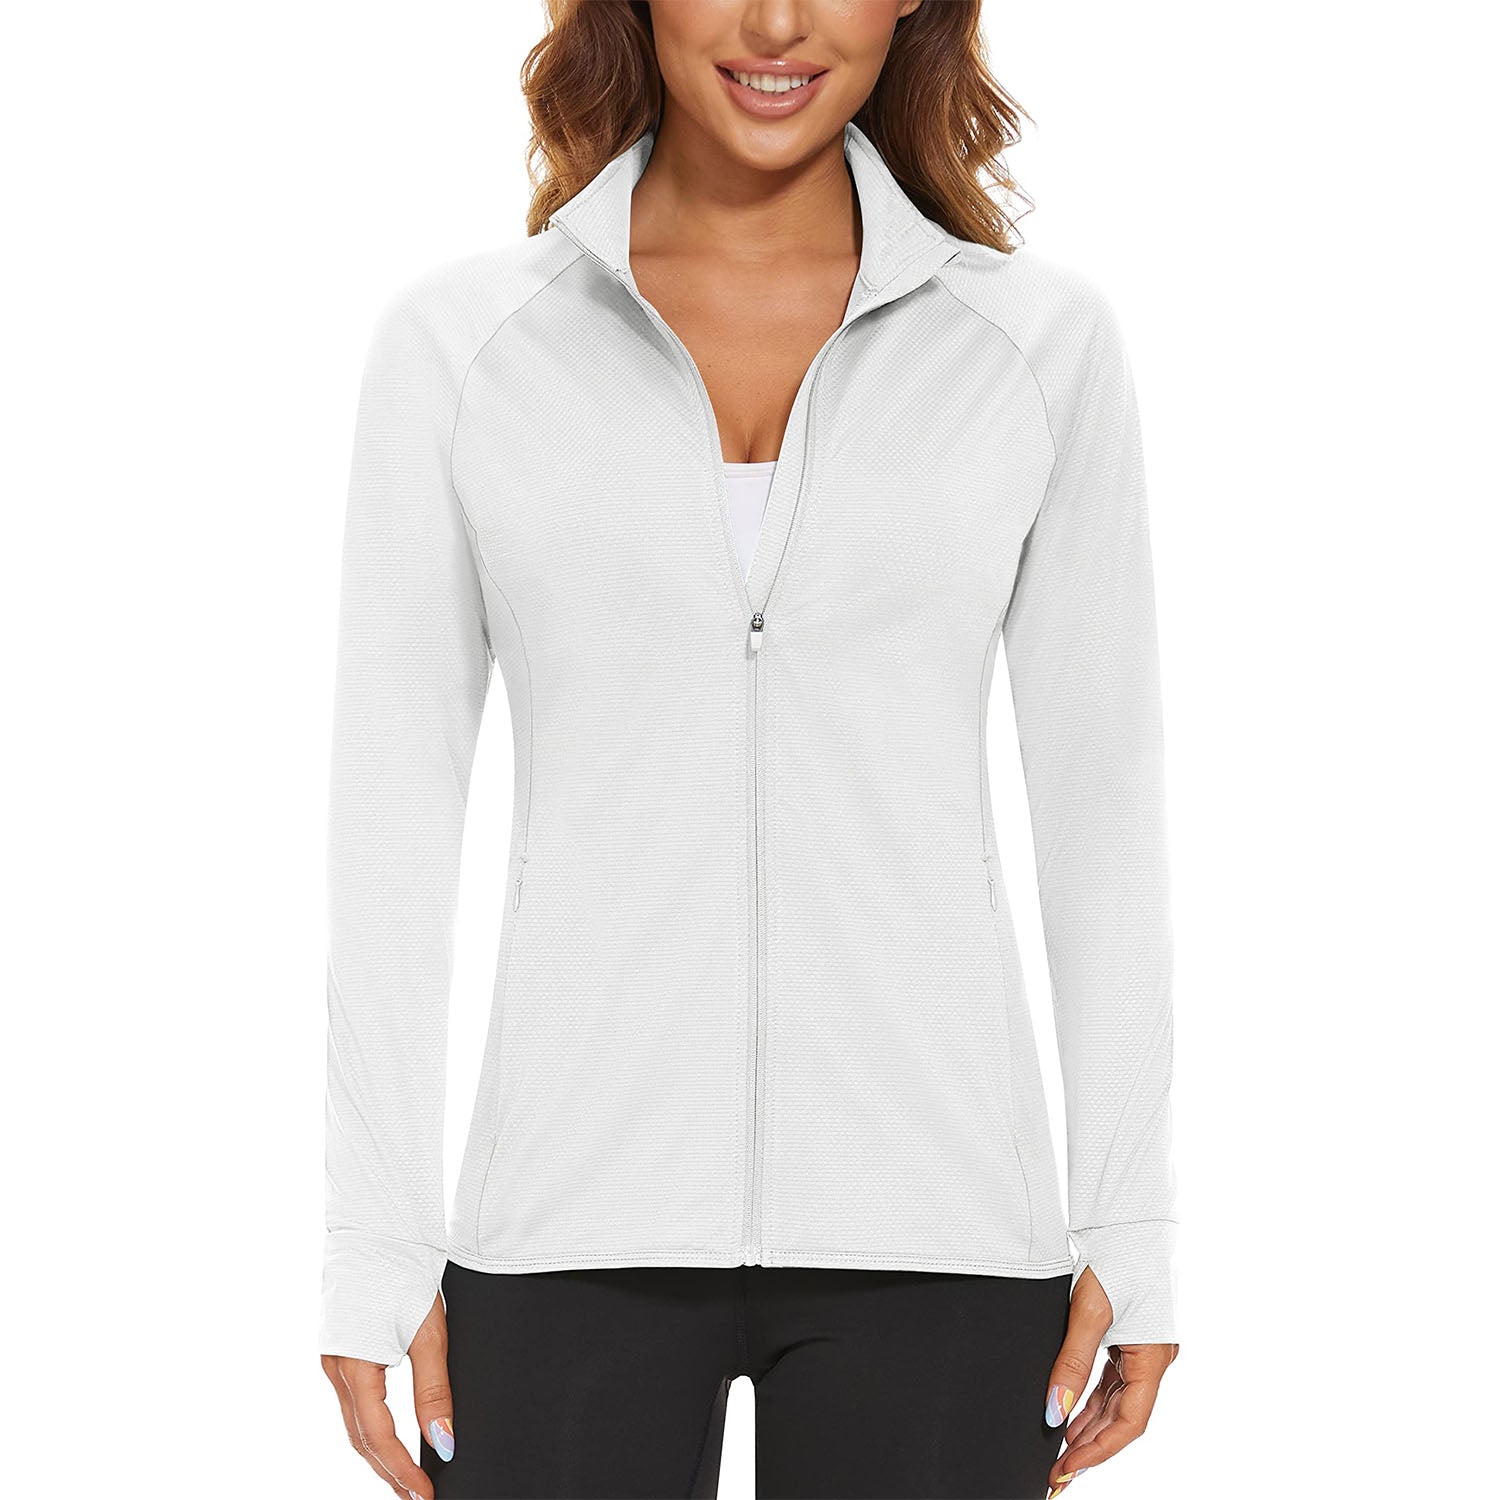 Women's Sun Protection Jacket Lightweight UPF50+ Long Sleeve Shirts ...